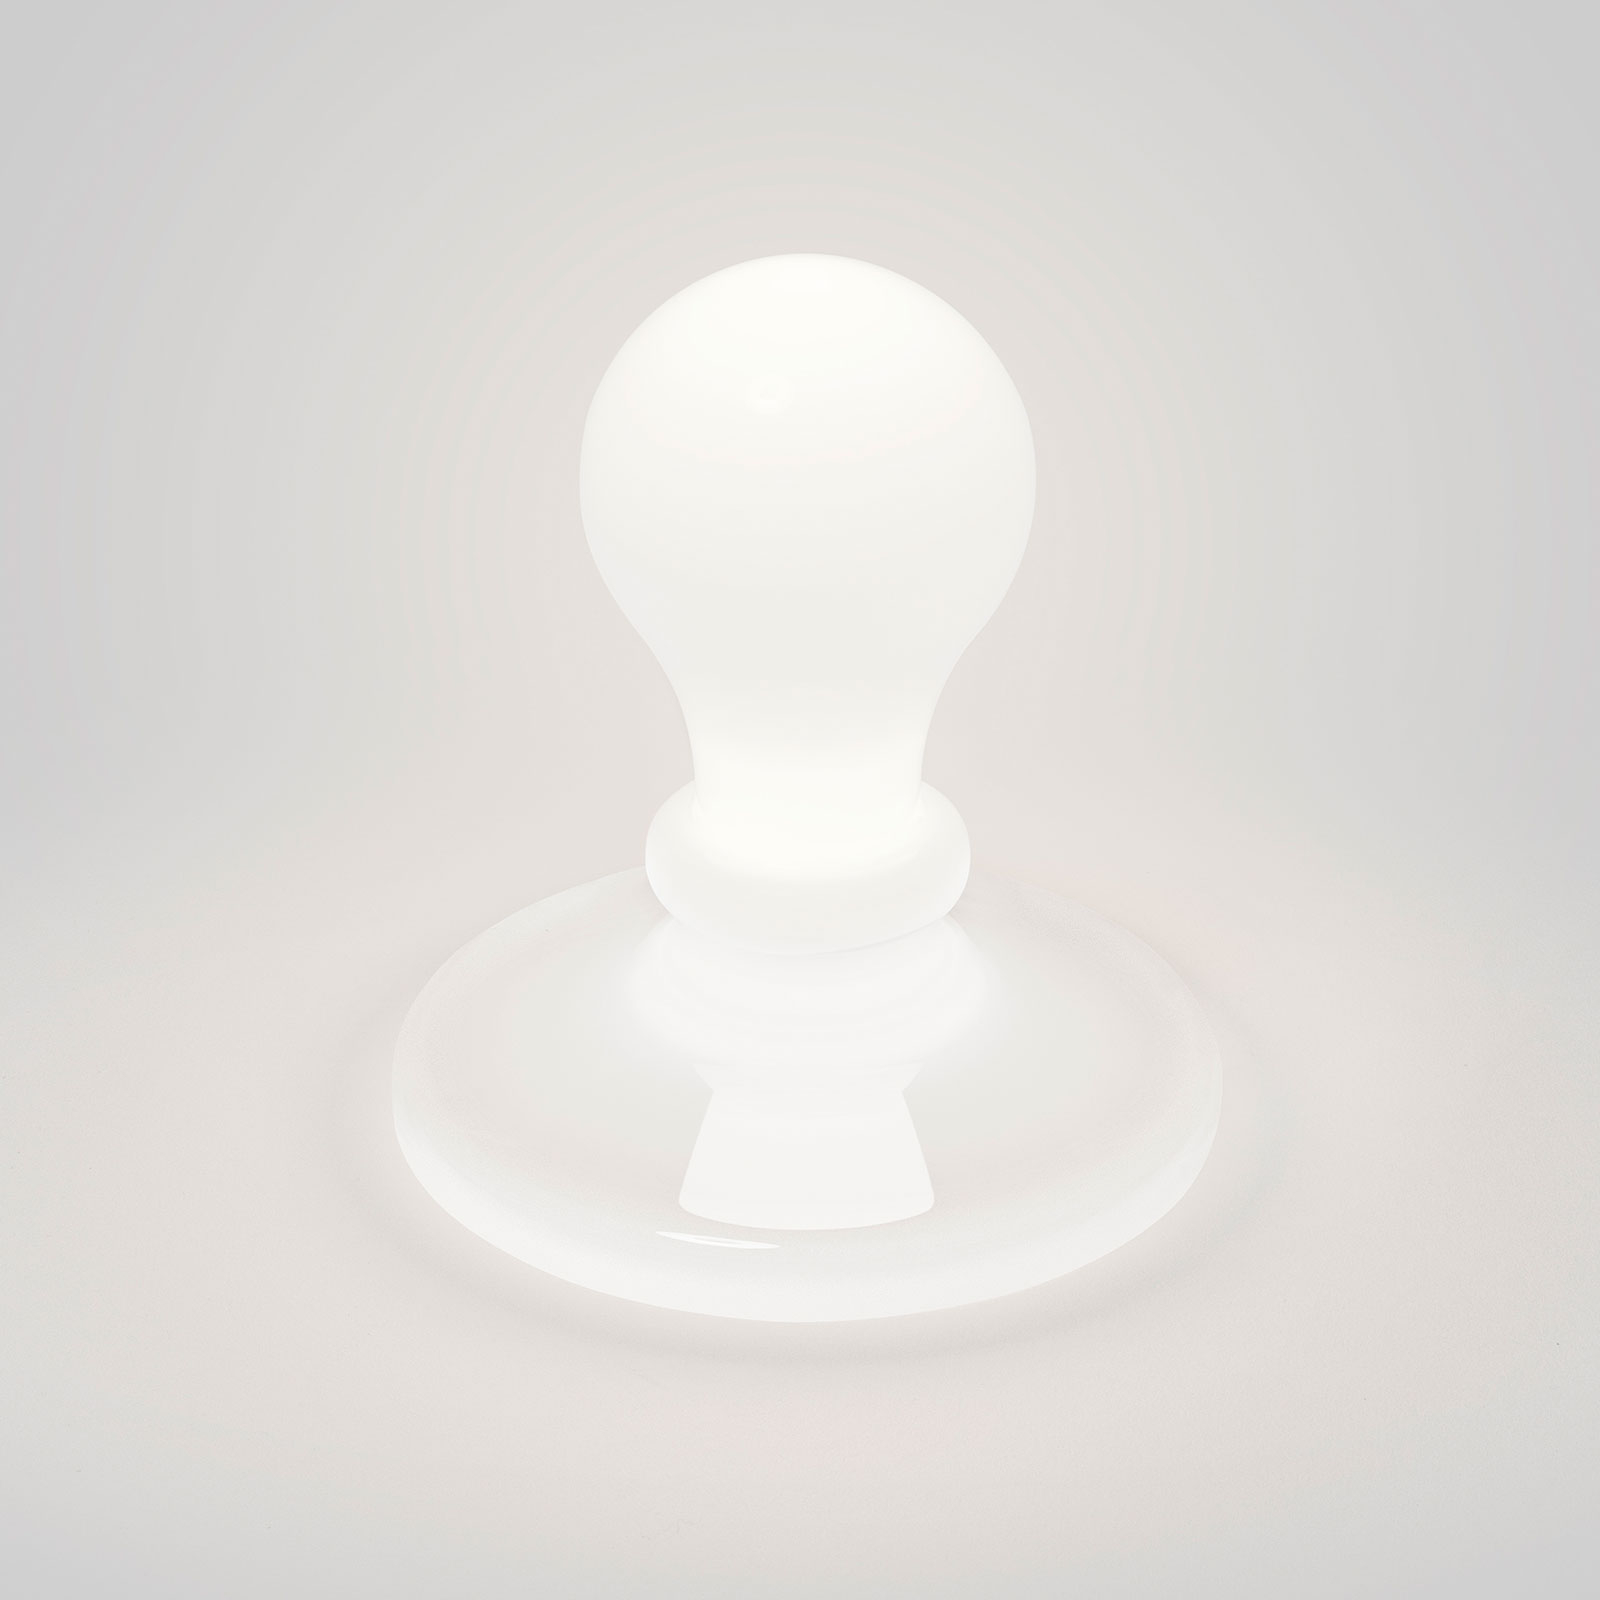 Lampa stołowa LED Foscarini White Light